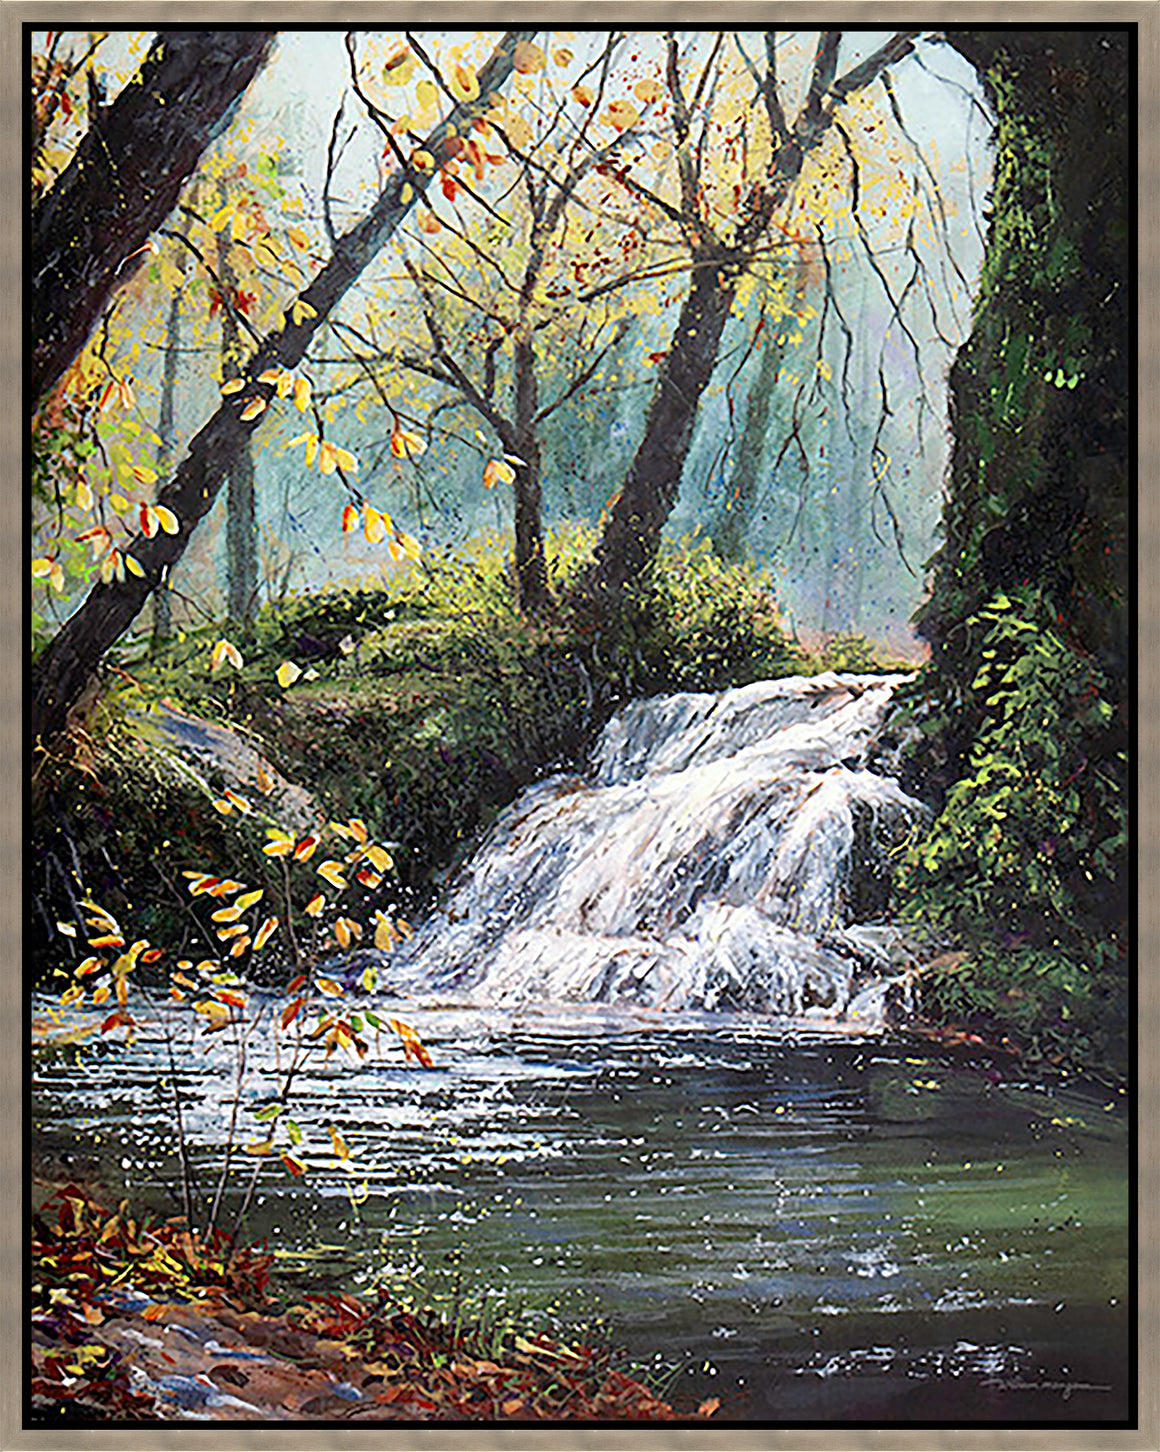 Small Falls by William Mangum - 30" x 38" Framed